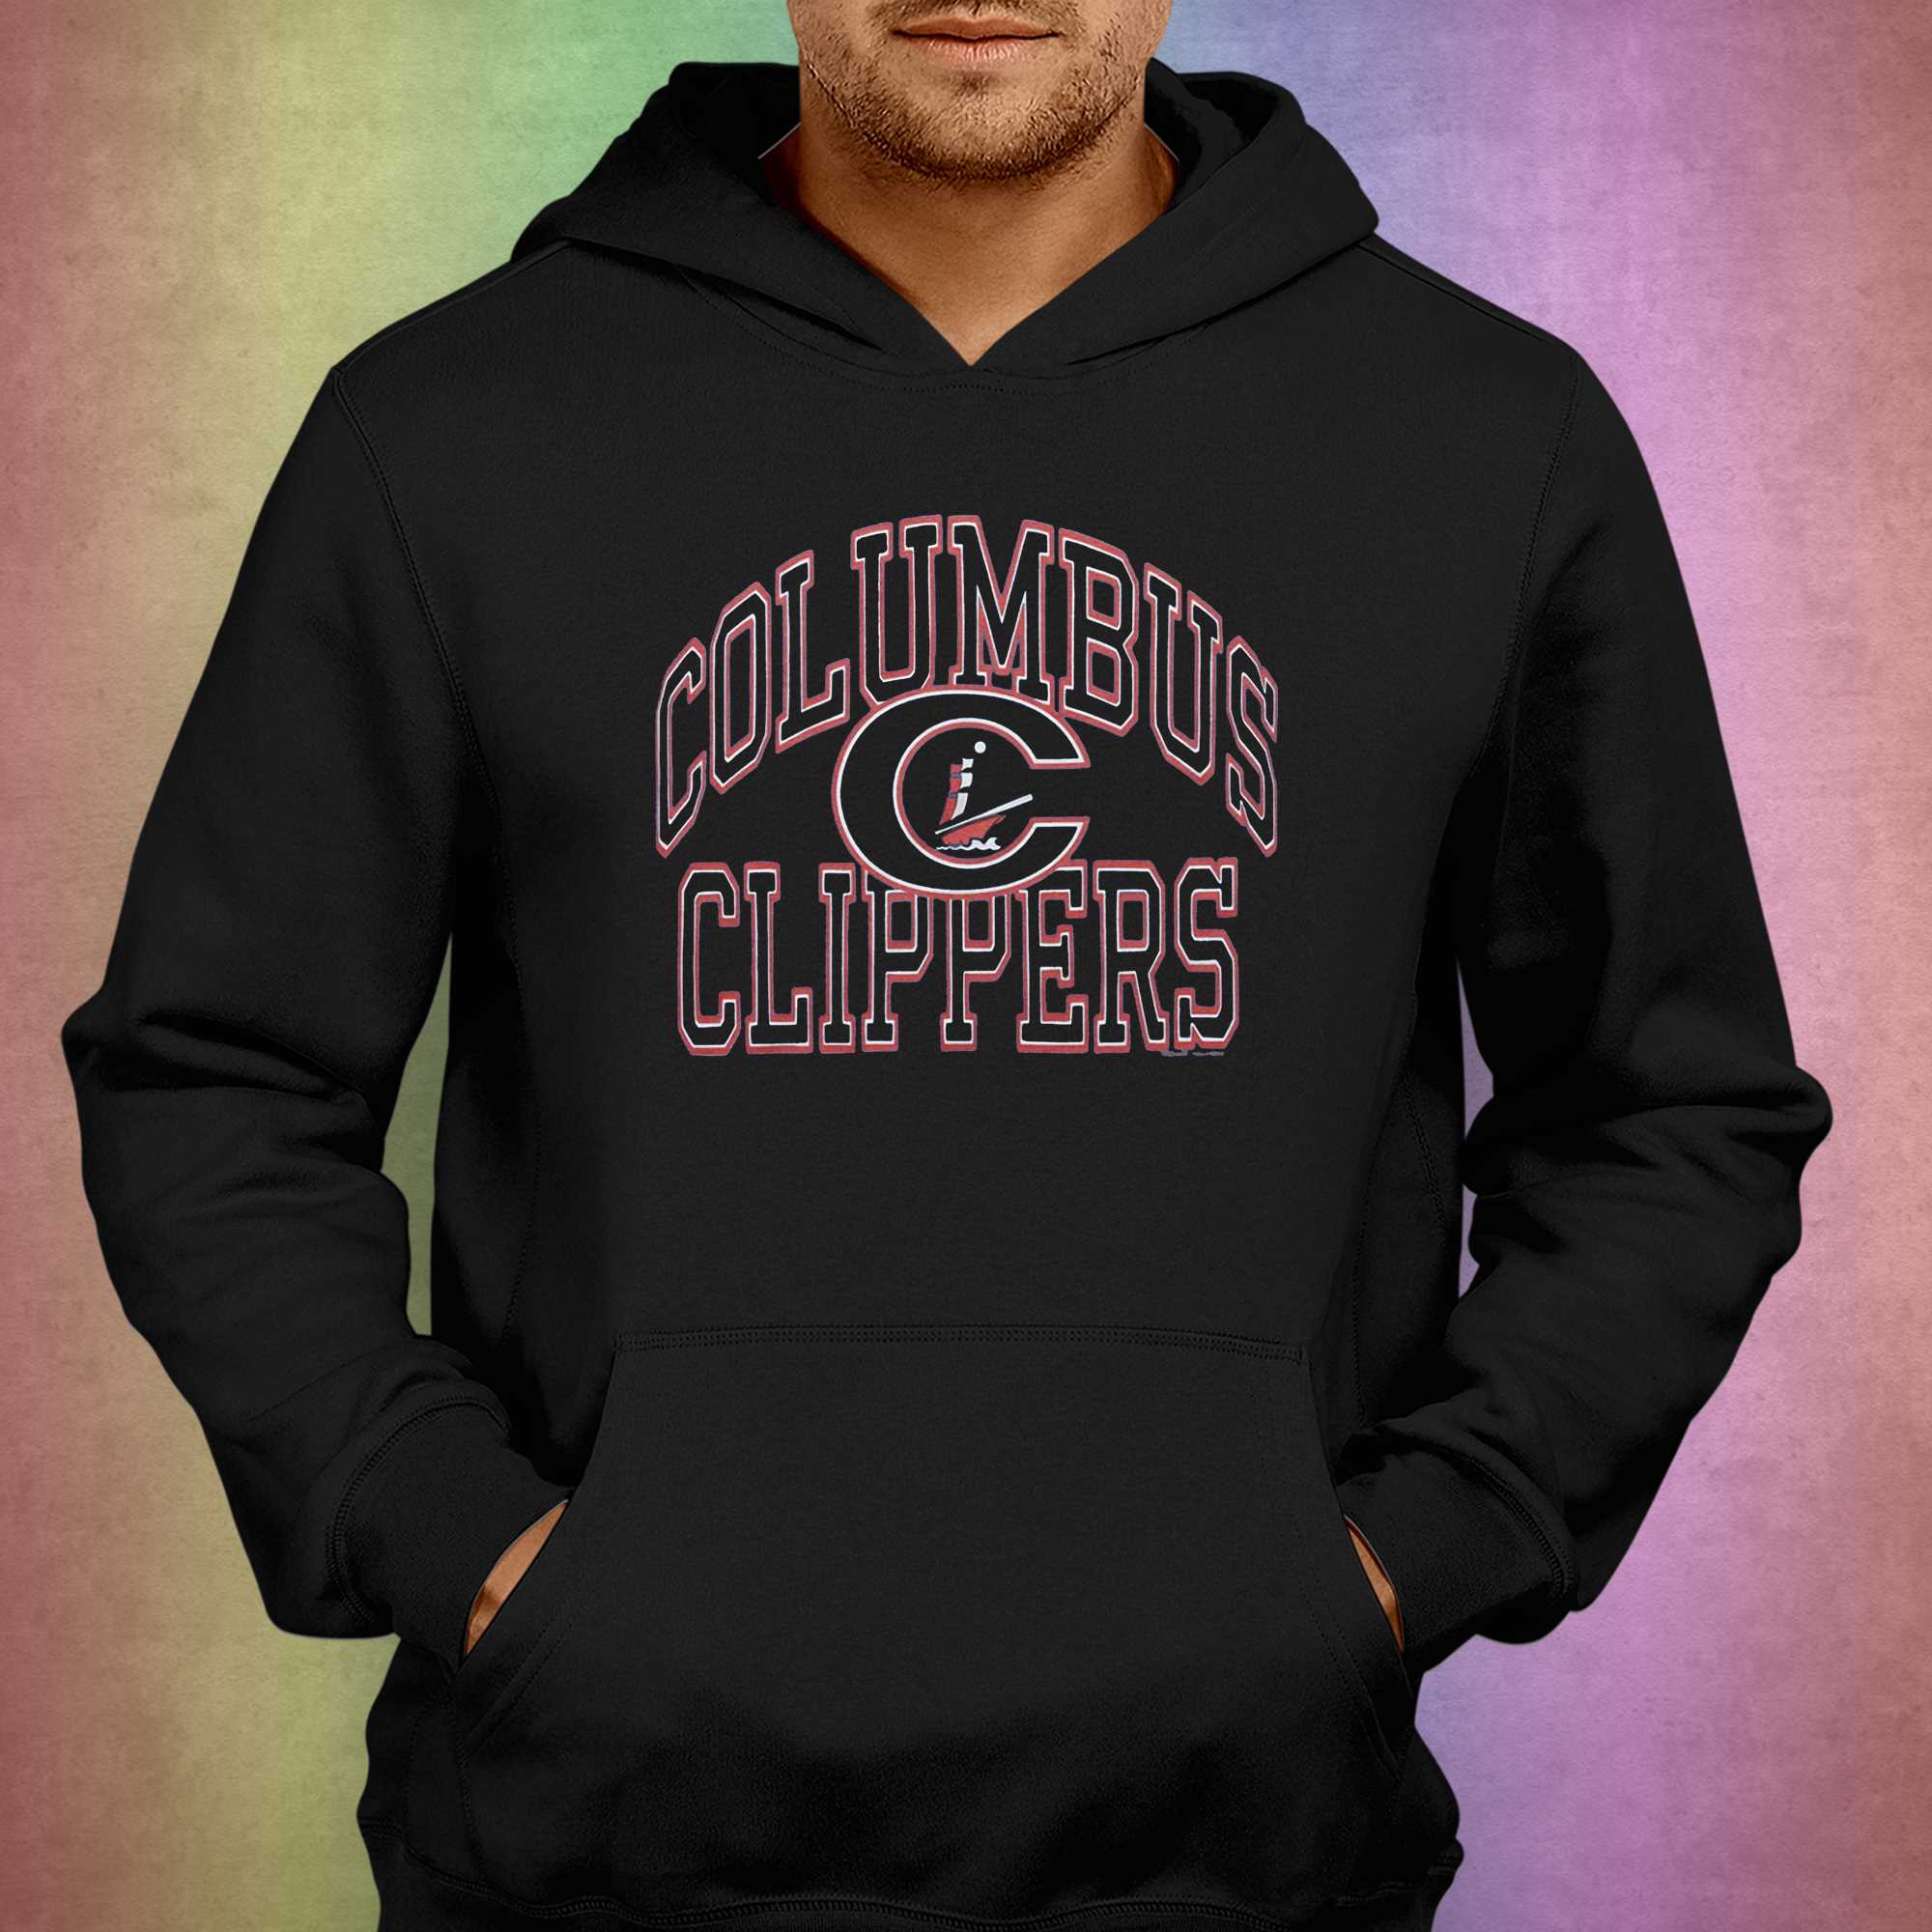 Columbus Clippers Helmet T-shirt - Shibtee Clothing